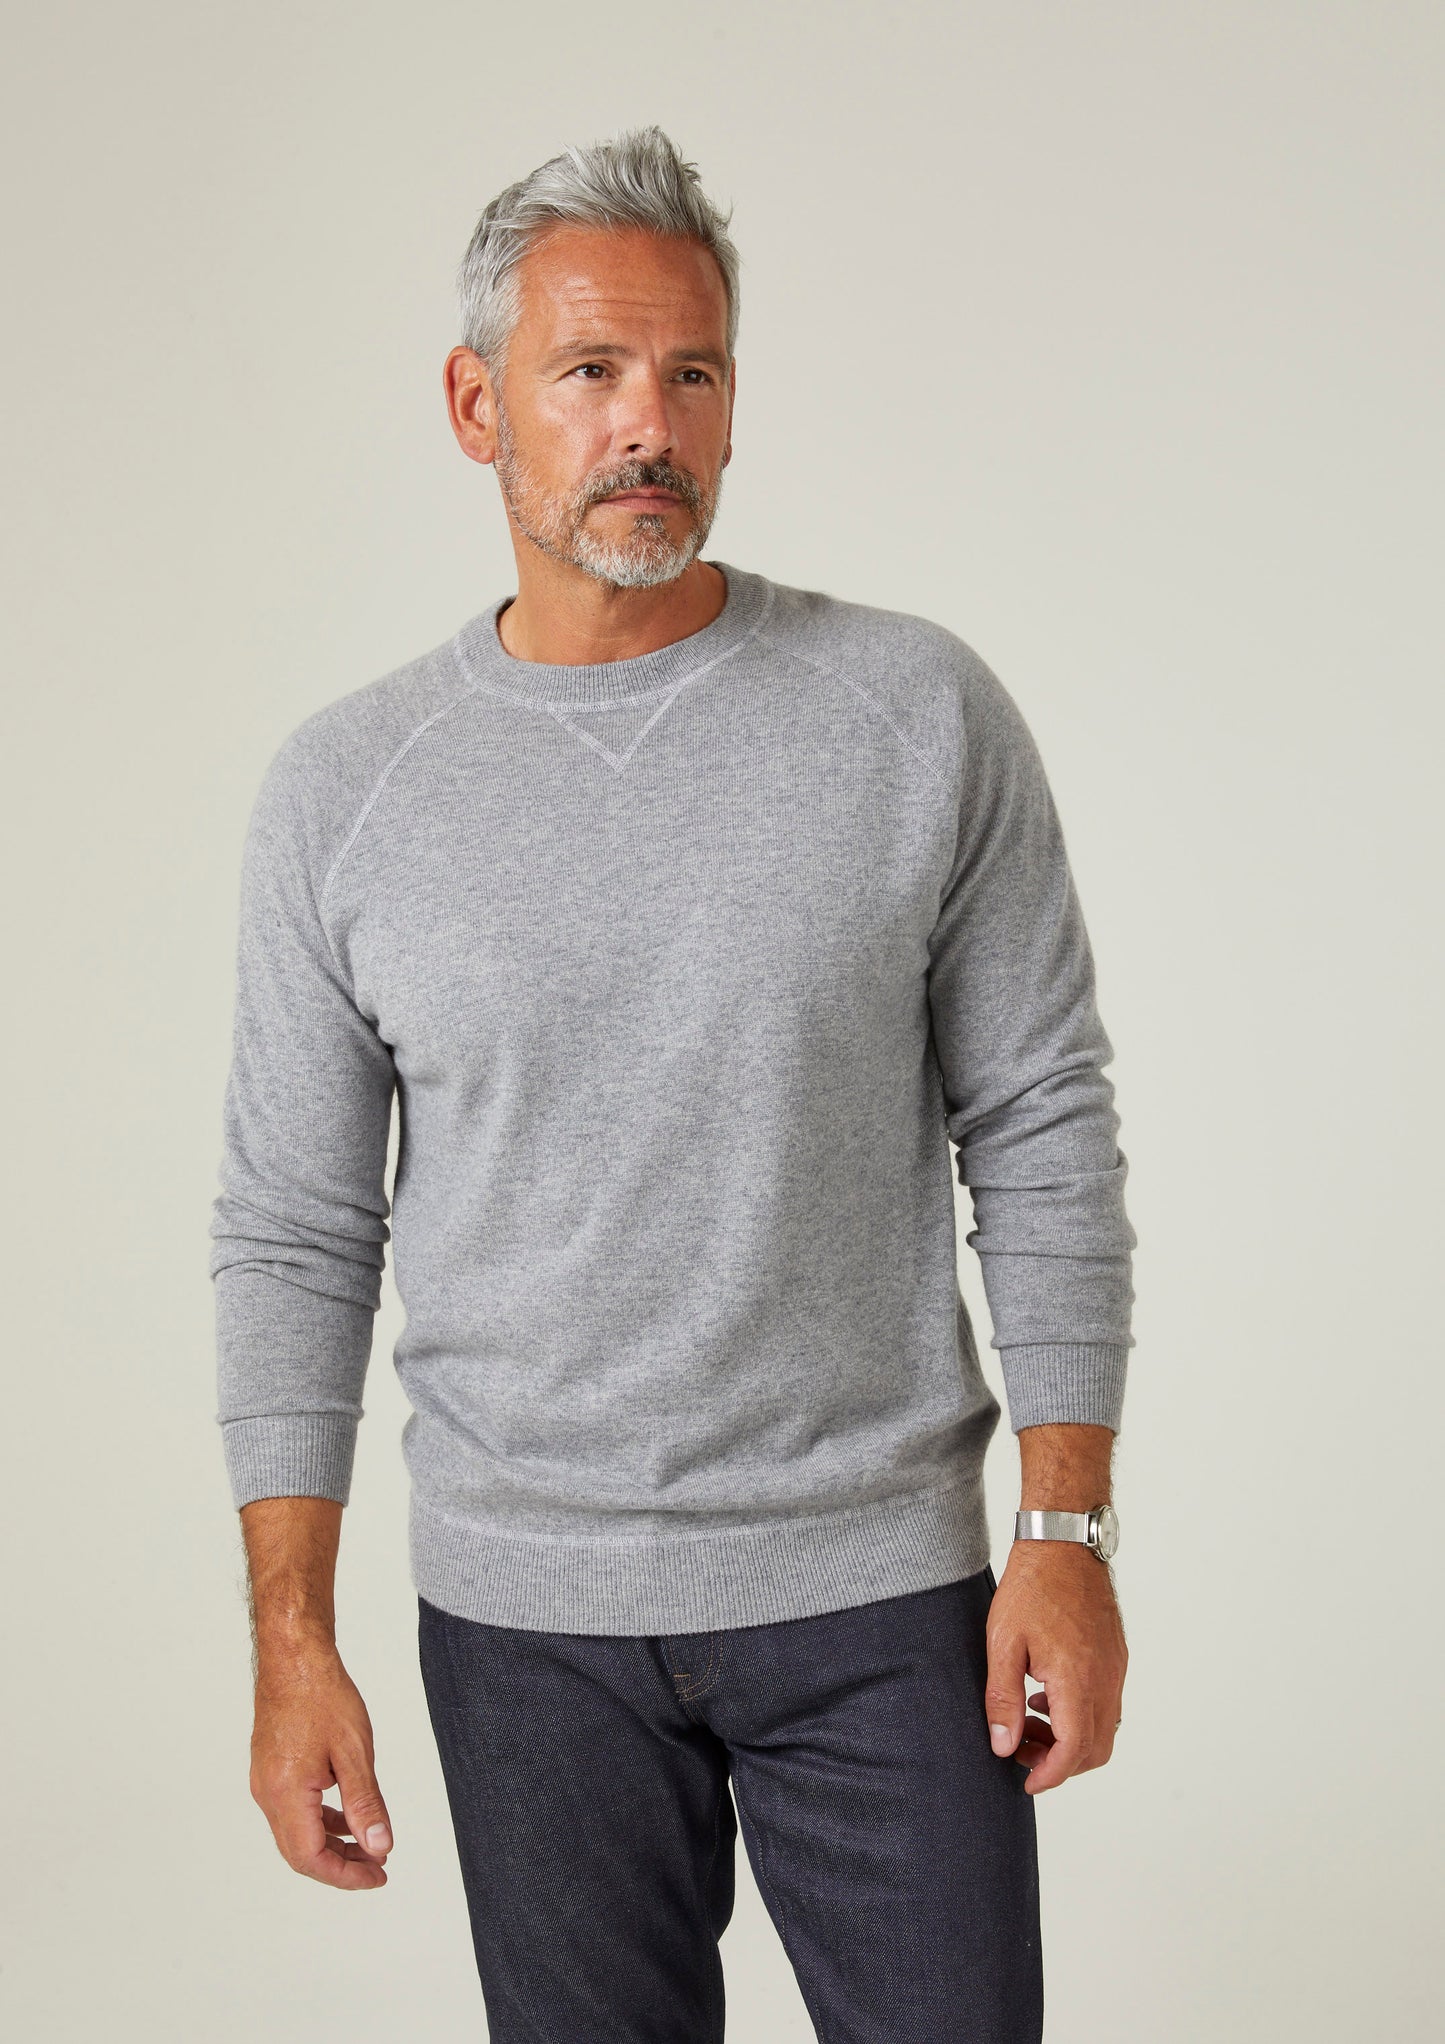 Assington Cashmere Light Grey Mix Sweatshirt - Regular Fit